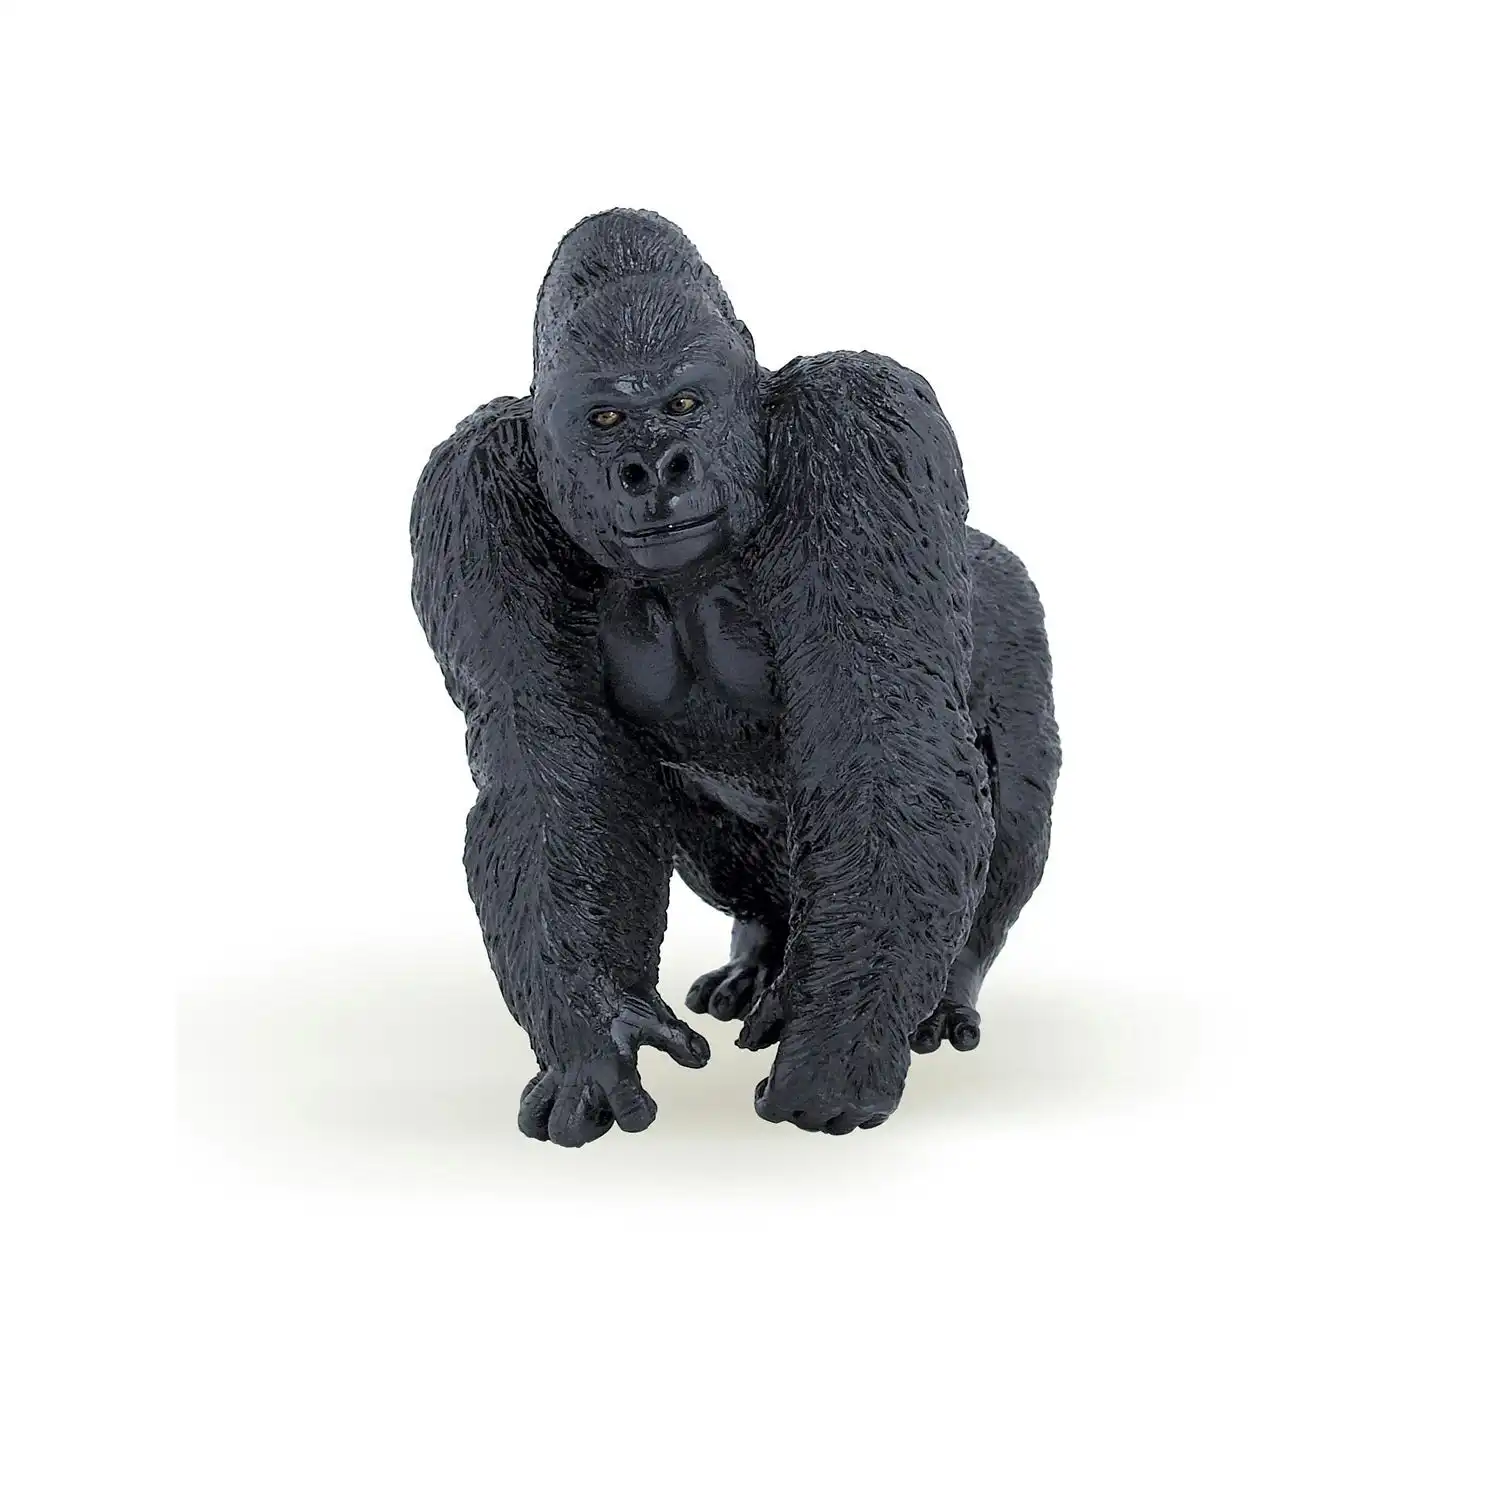 Papo - Gorilla Figurine